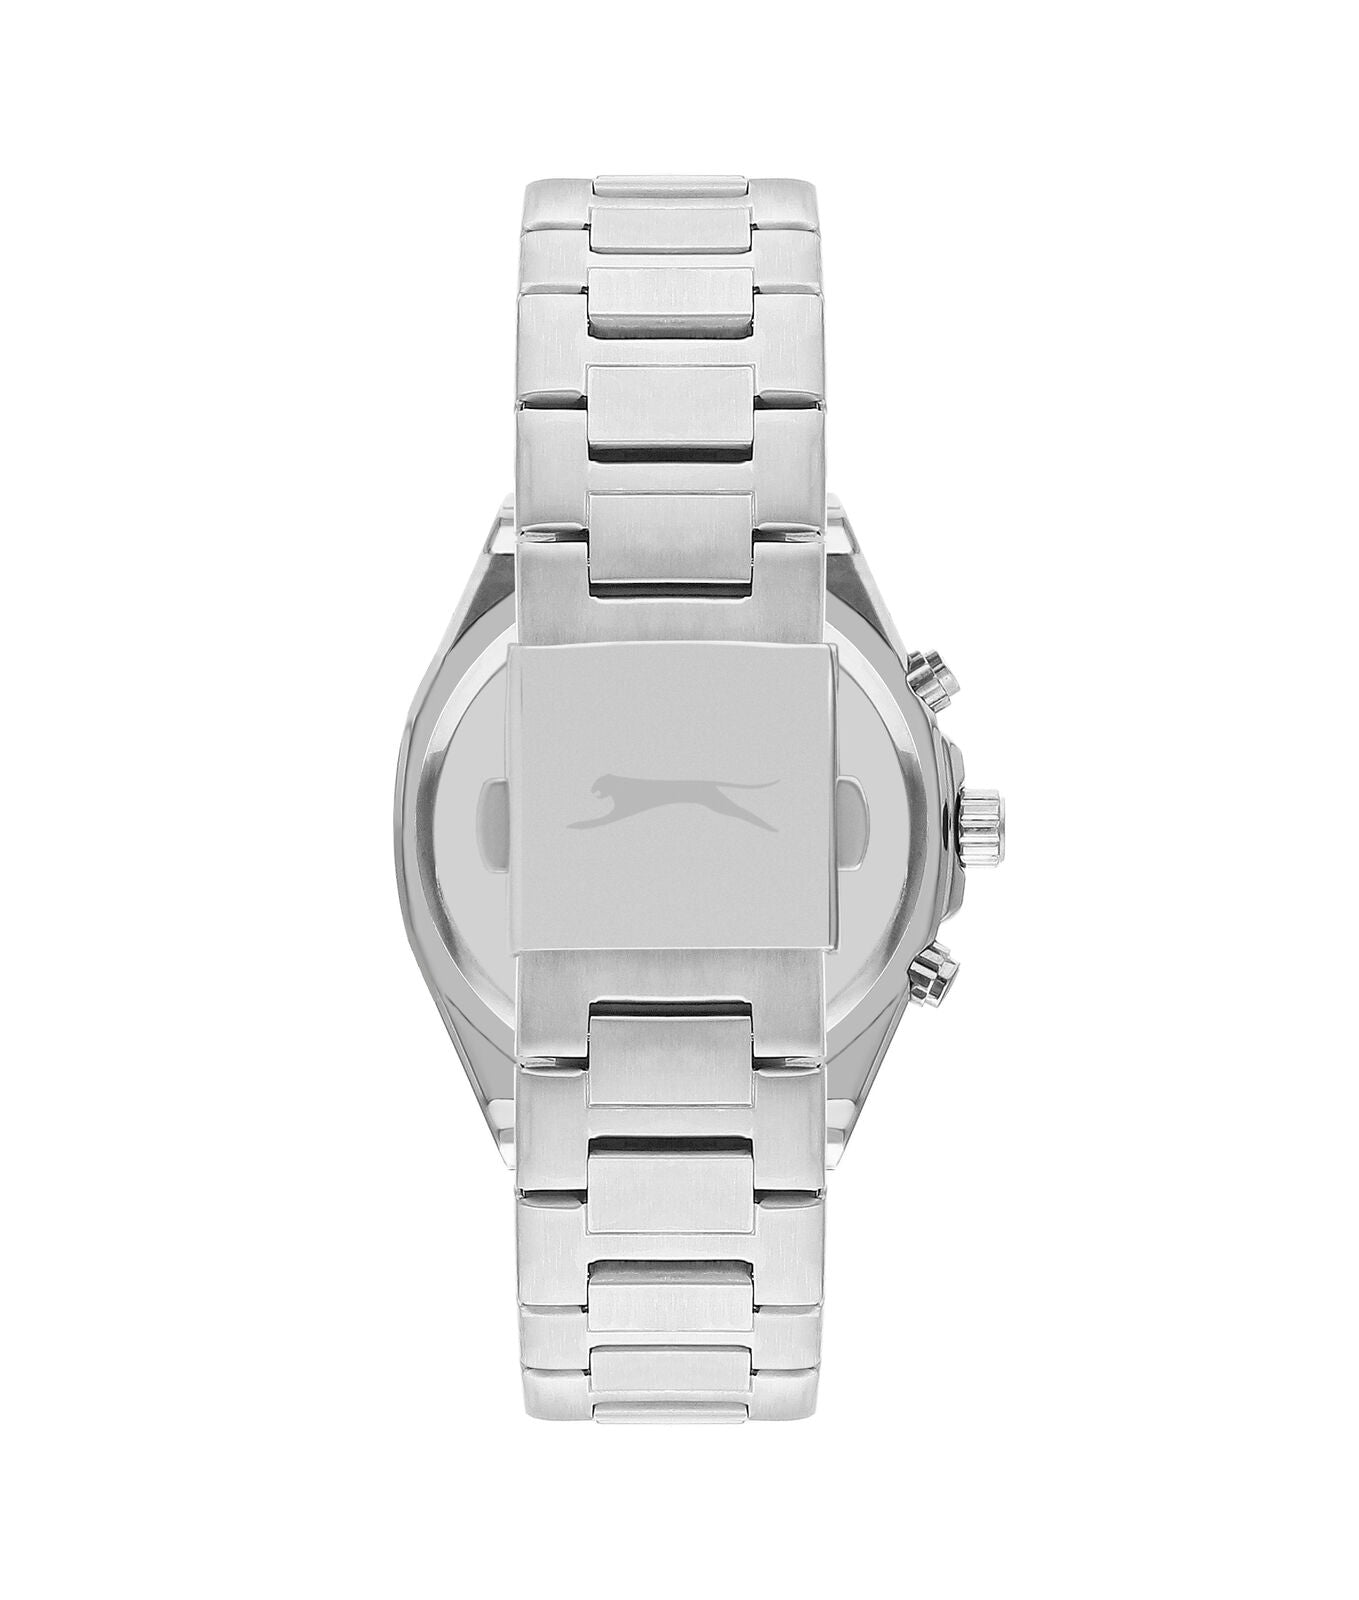 Slazenger Gents Multi Function Solid stainless steel  Watch - SL.9.2106.2.01